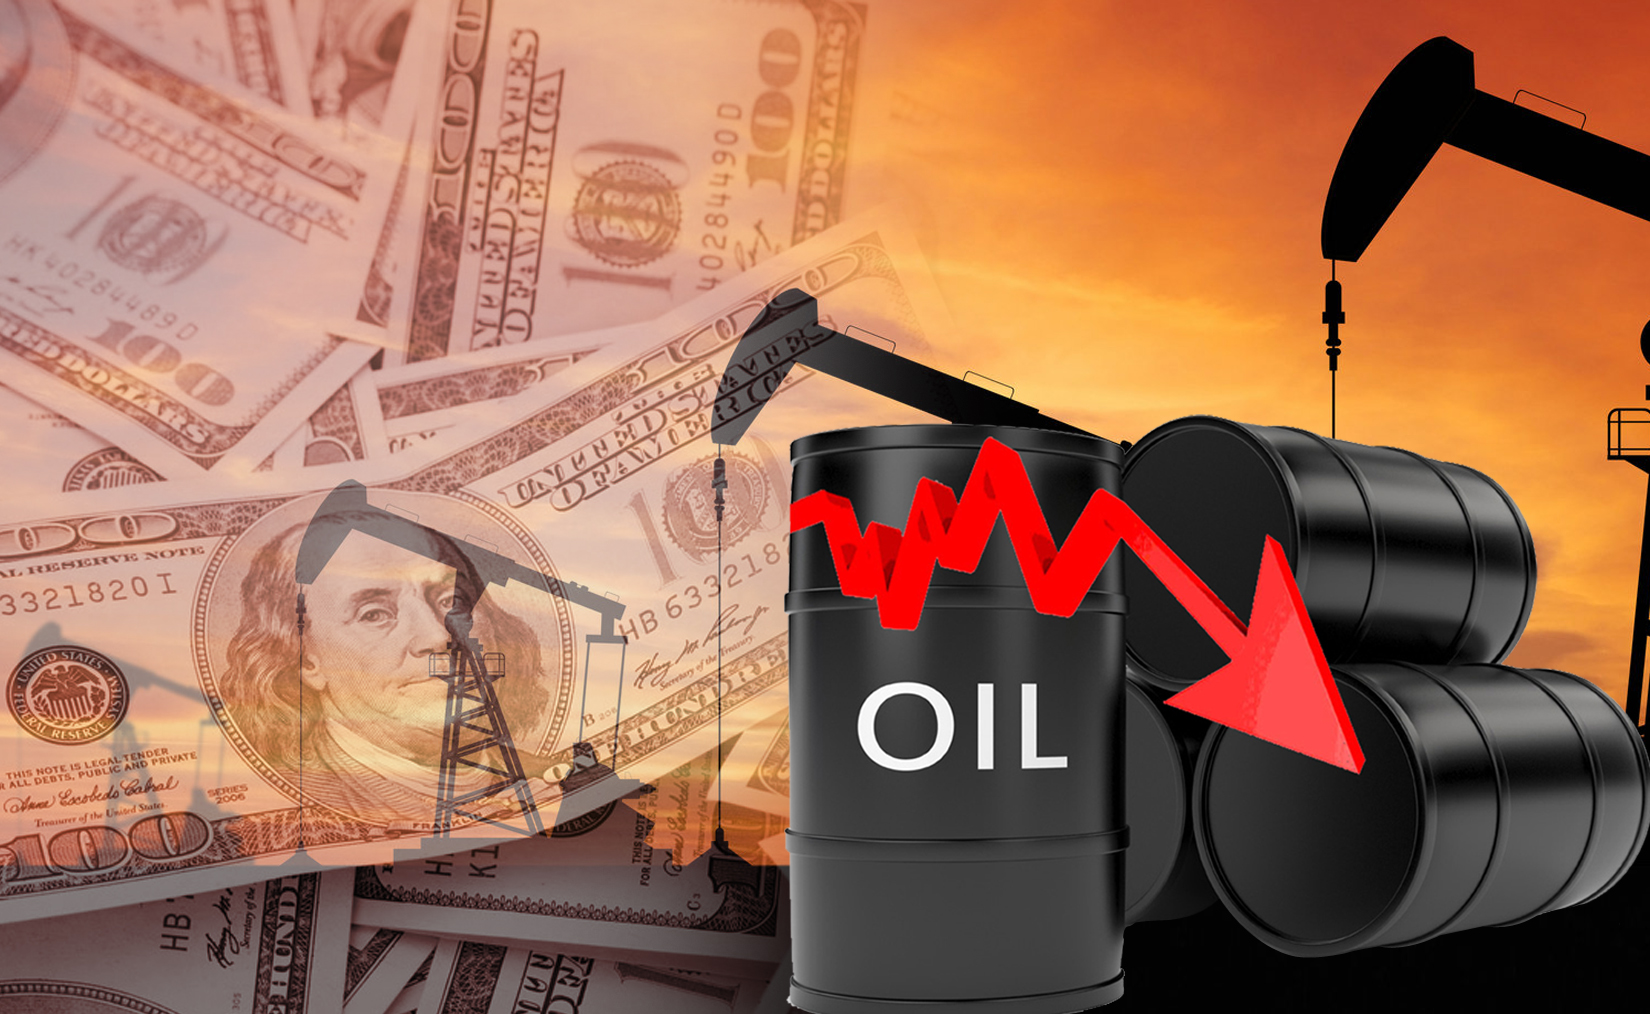 Kuwait crude oil drop 51 cents Wed. to USD 85.80 pb - KPC                                                                                                                                                                                                 